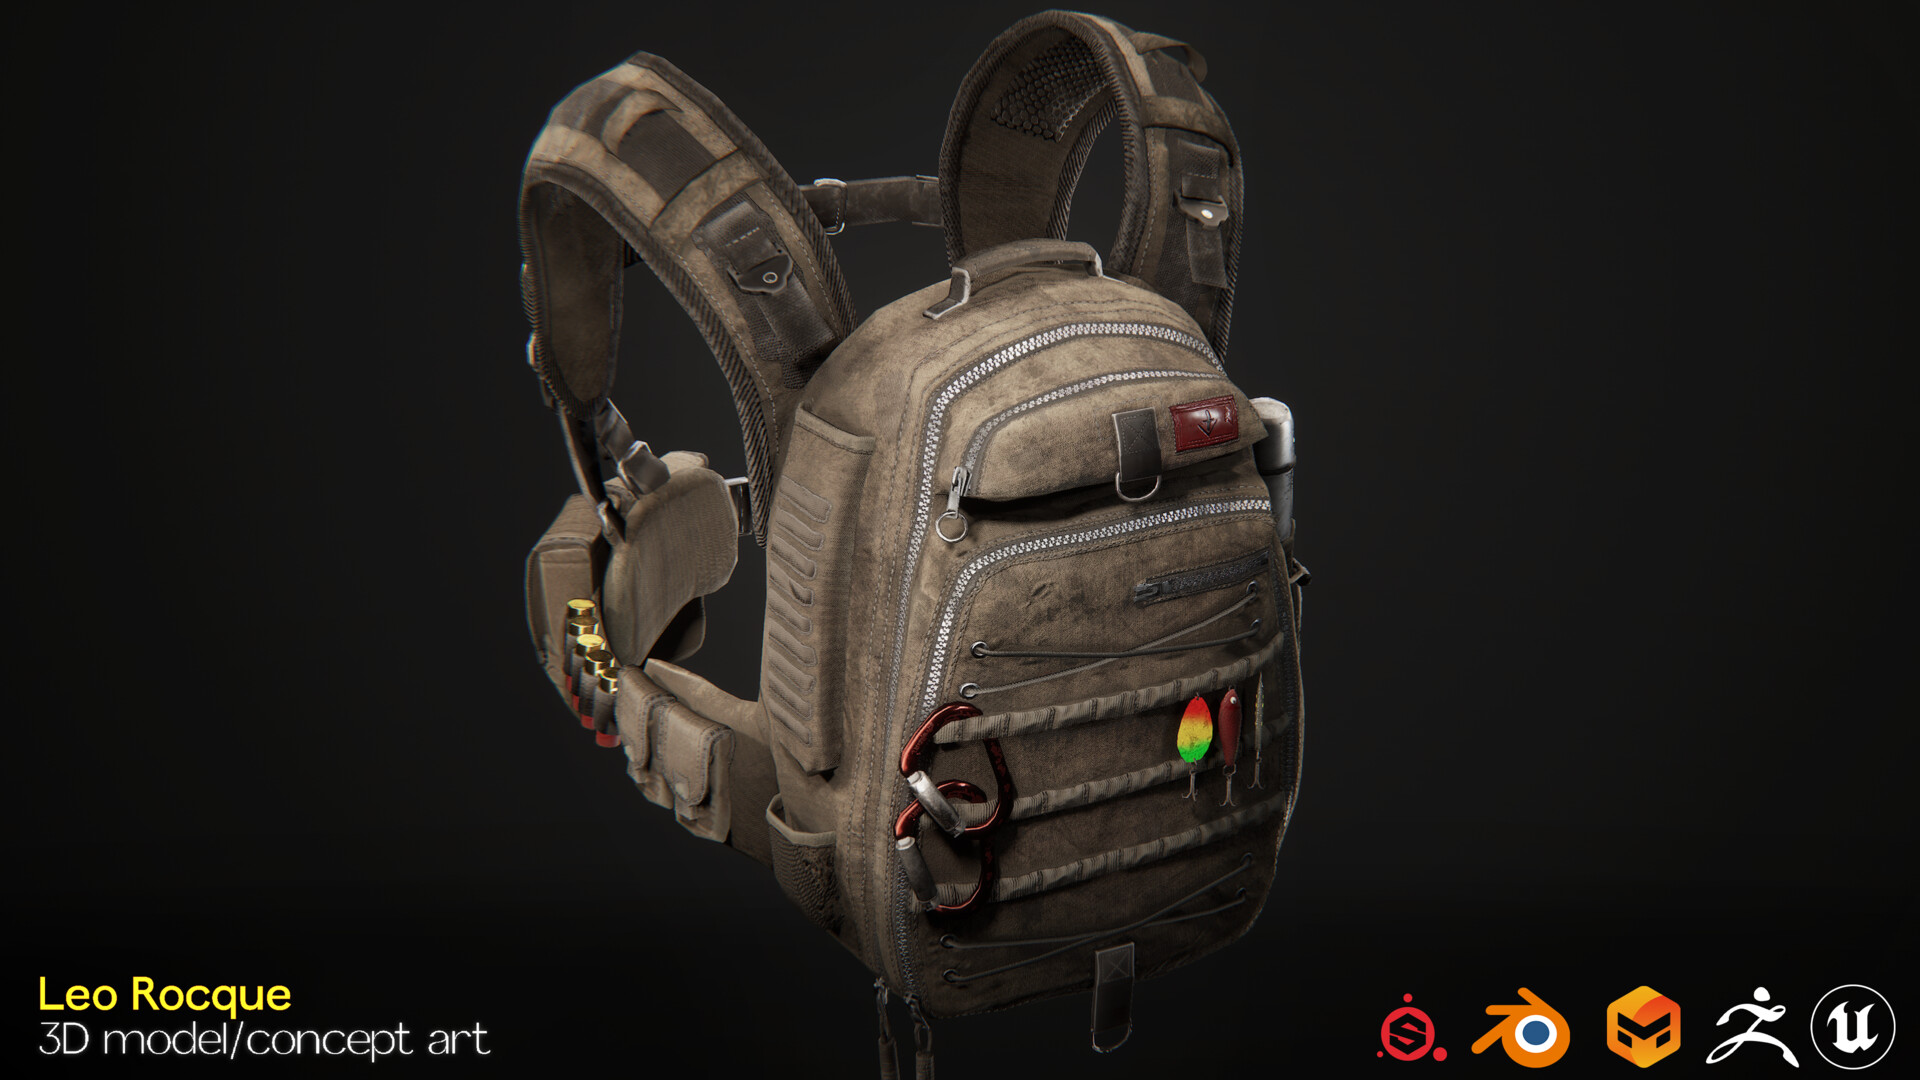 ArtStation - Fisherman's friend - Backpack model